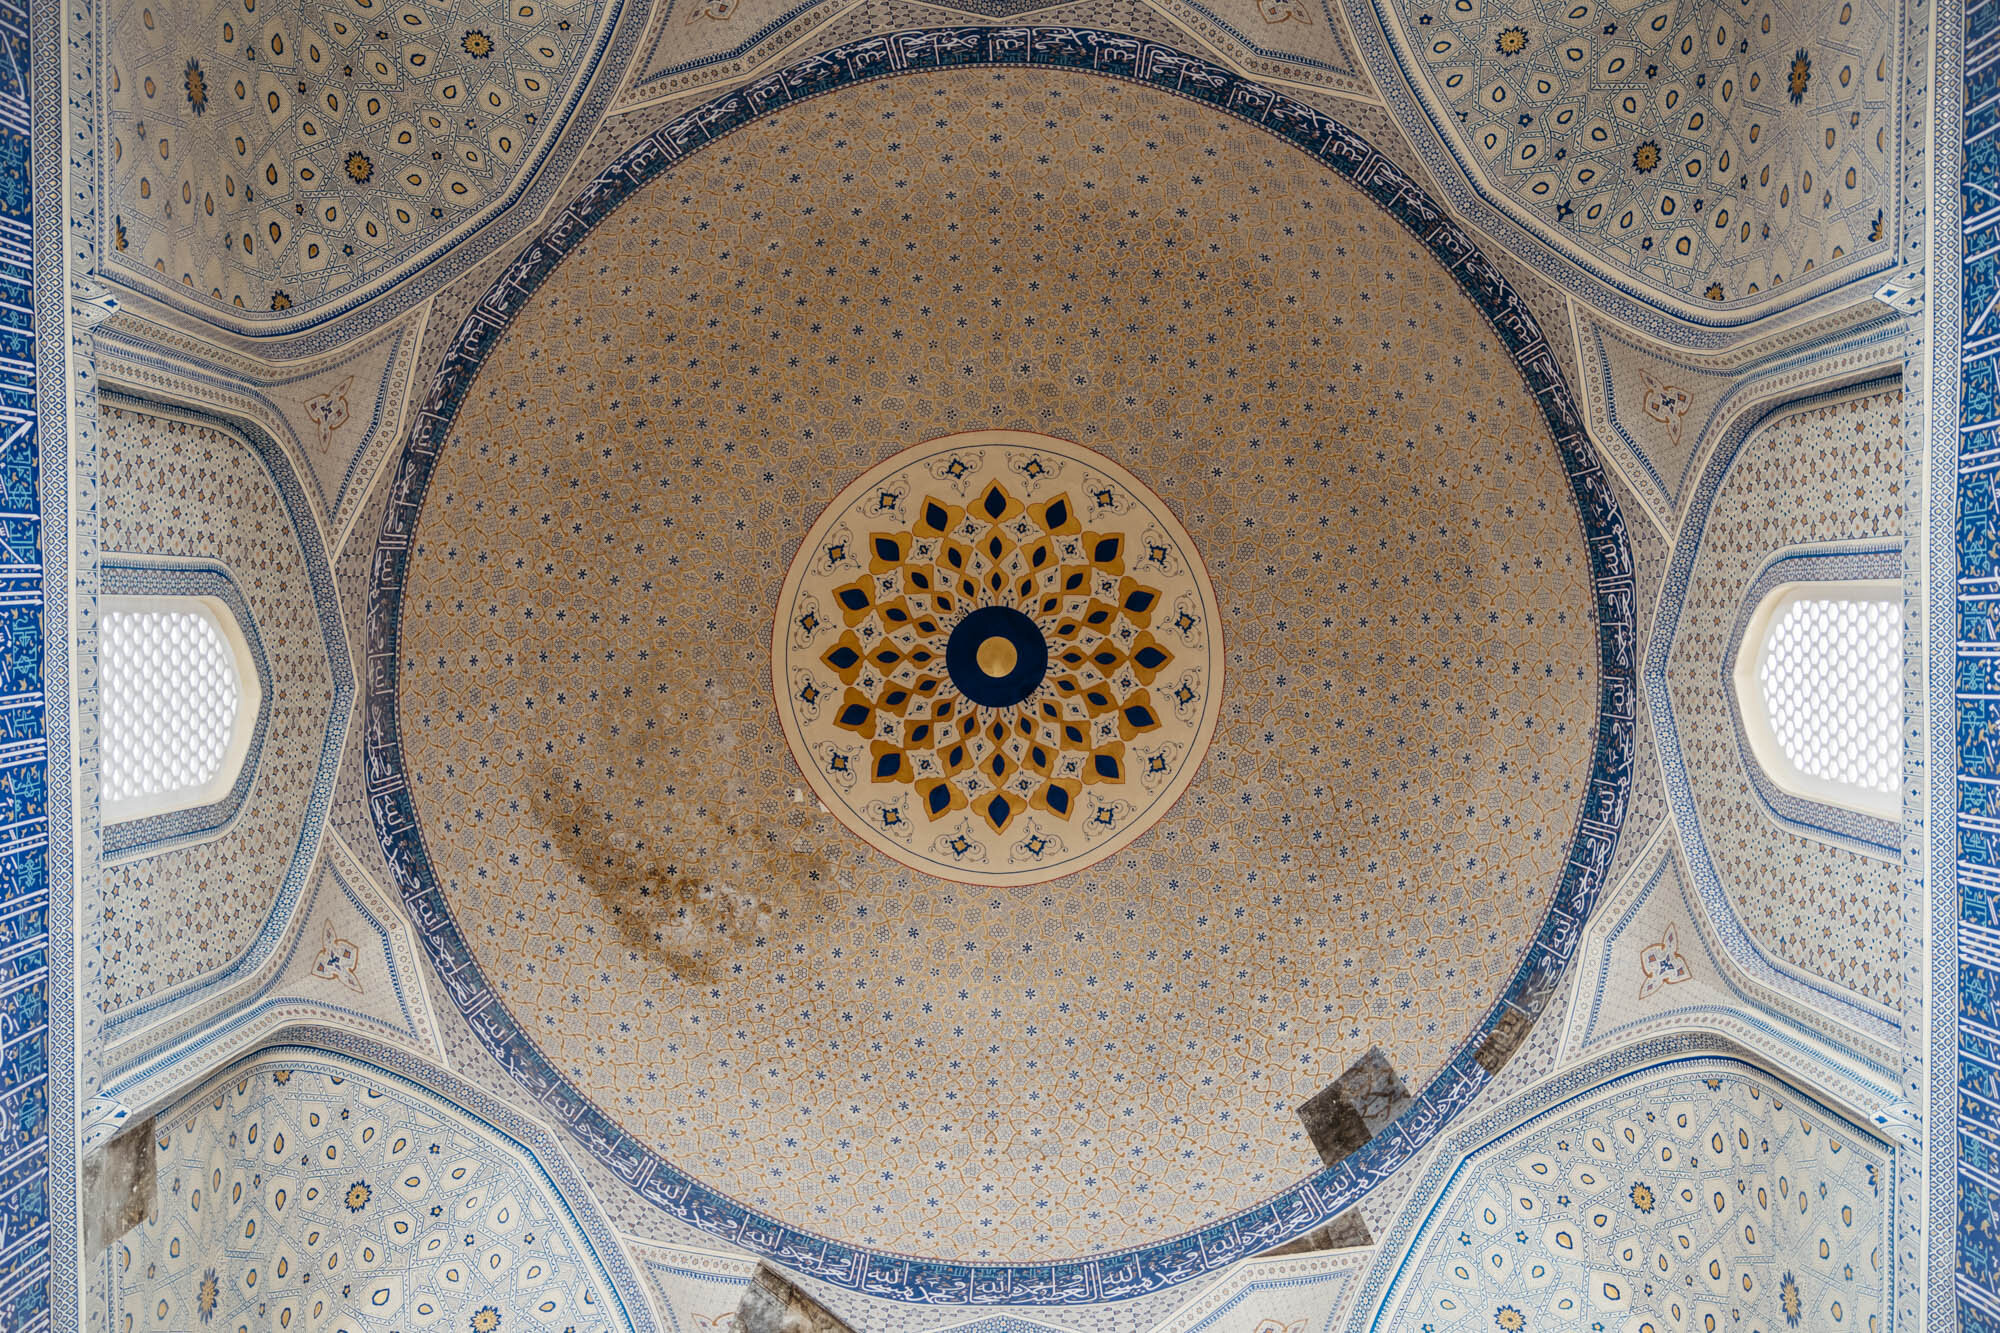  Ceiling details from the Bibi-Khanym Mosque, Samarkand 